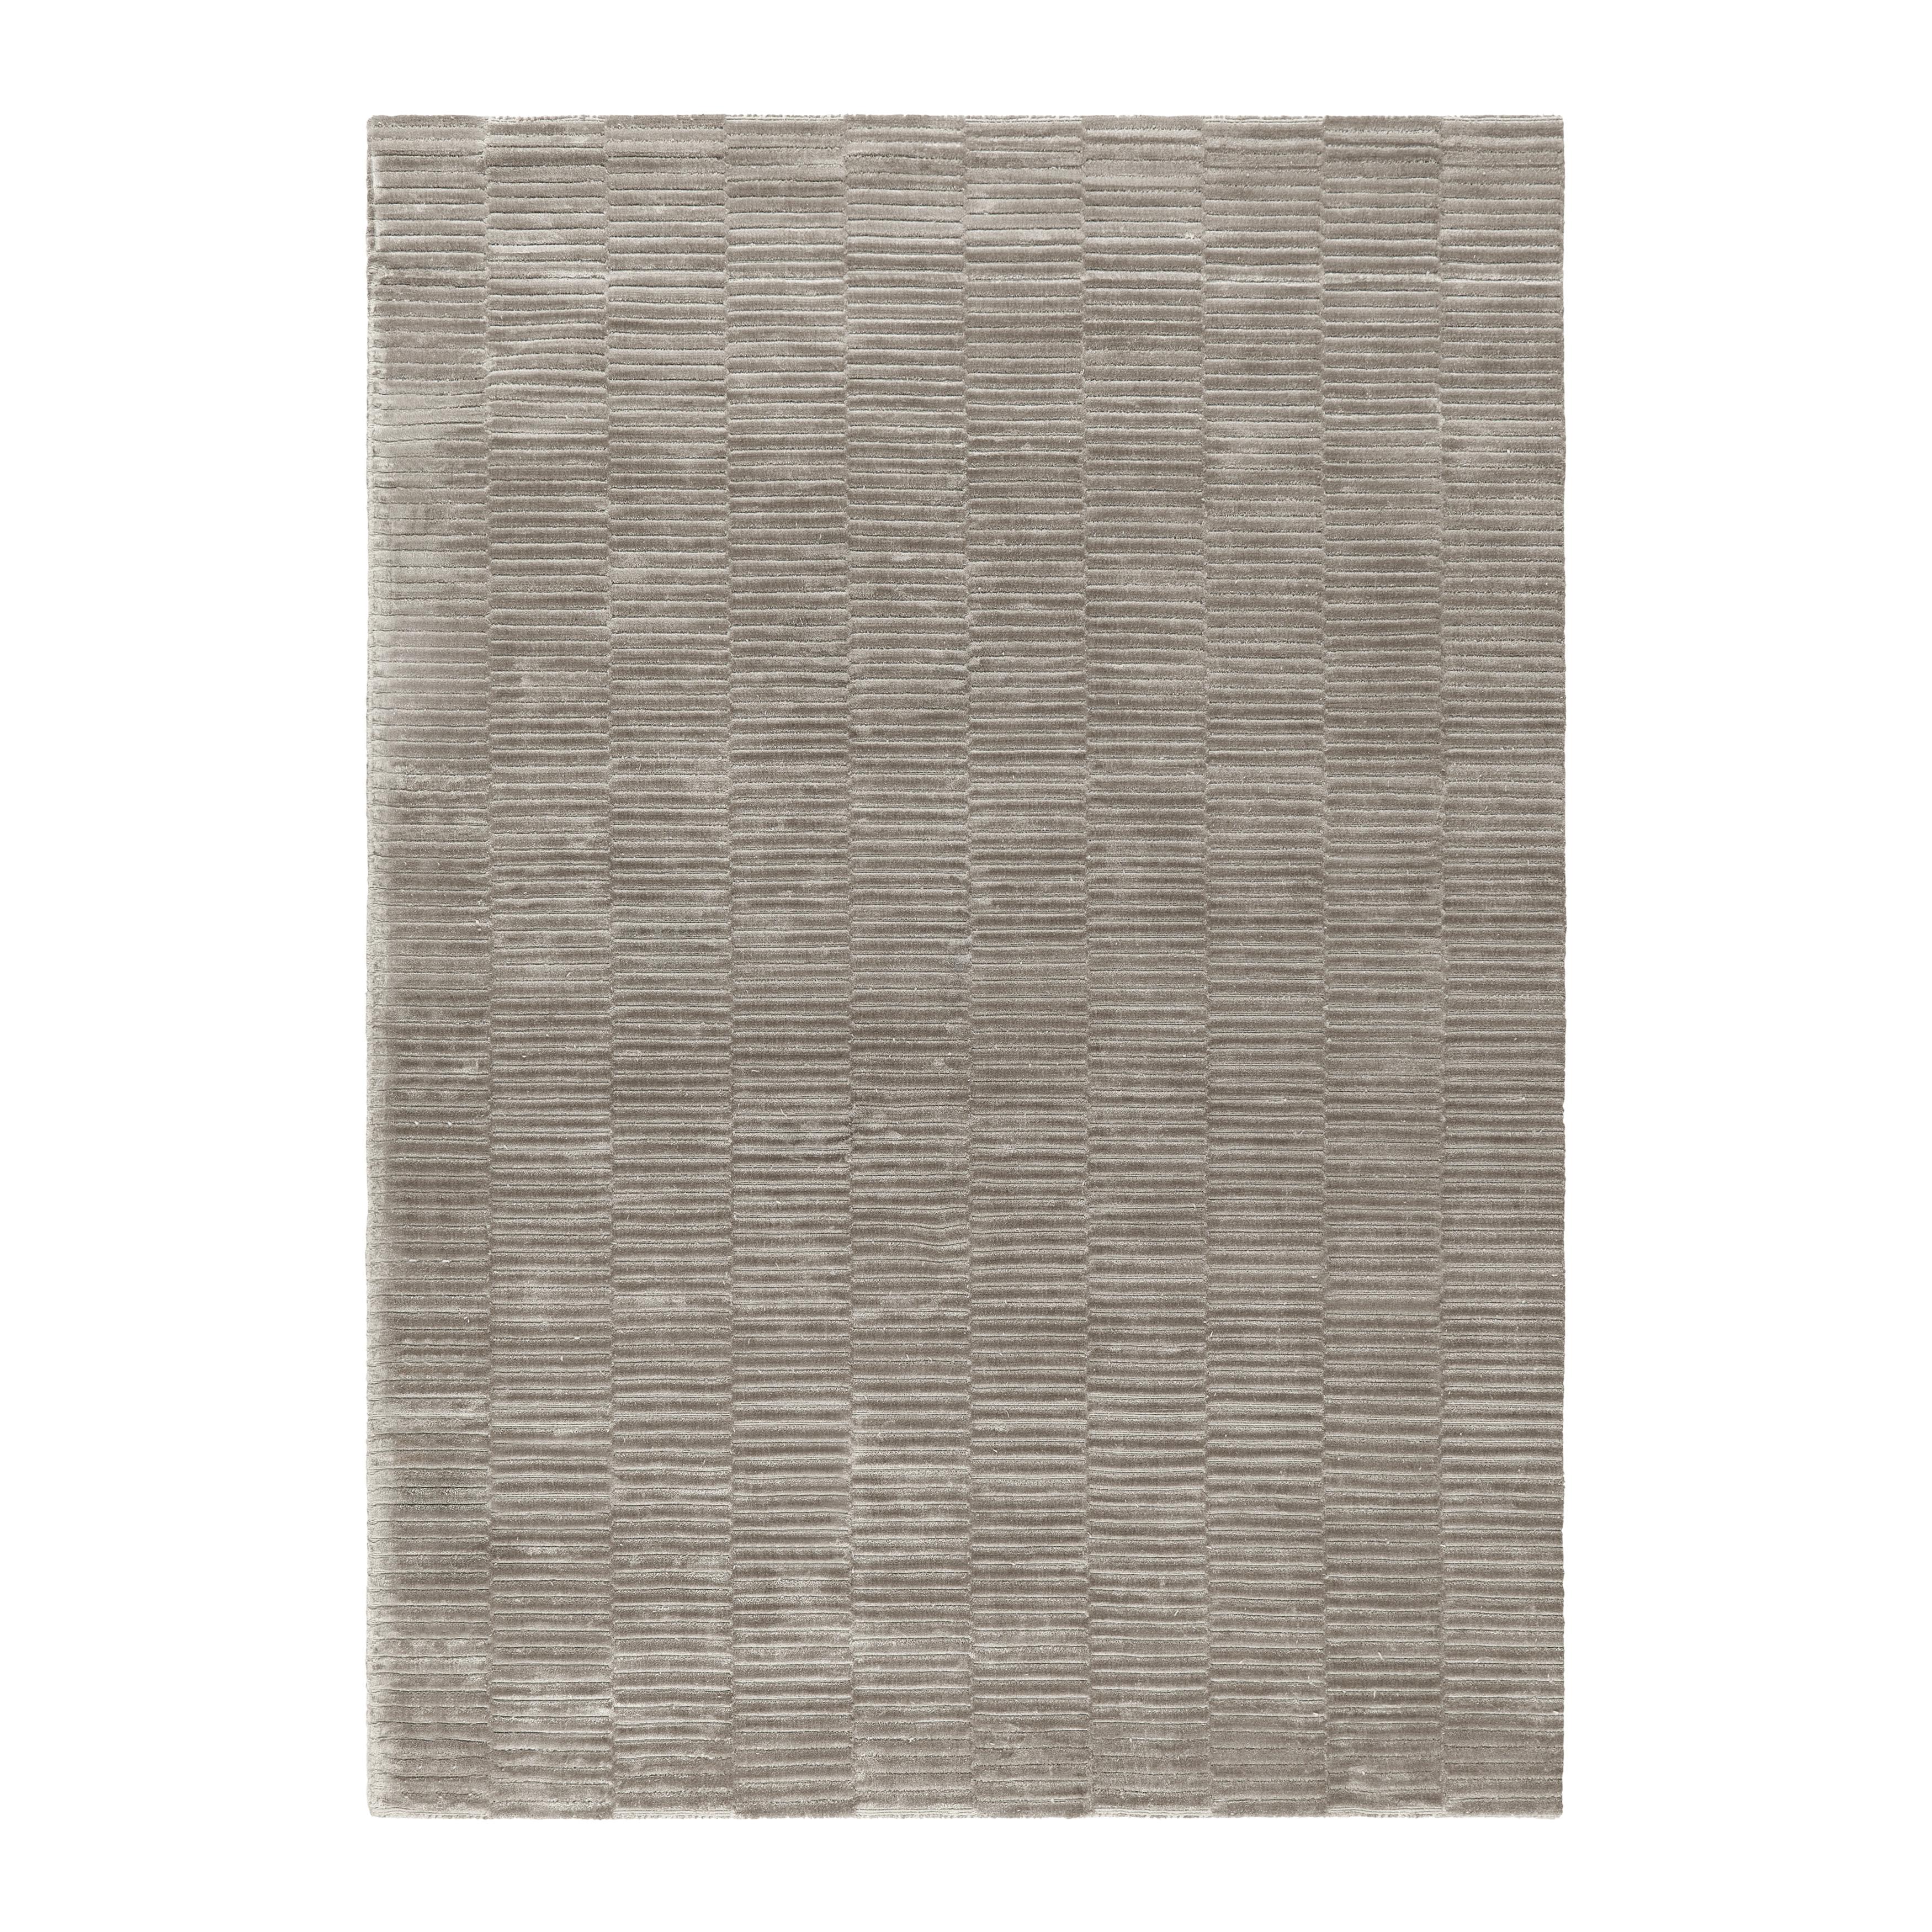 Teppich Calma in Grau ca. 160x230cm - Grau, MODERN, Textil (160/230cm) - Bessagi Home